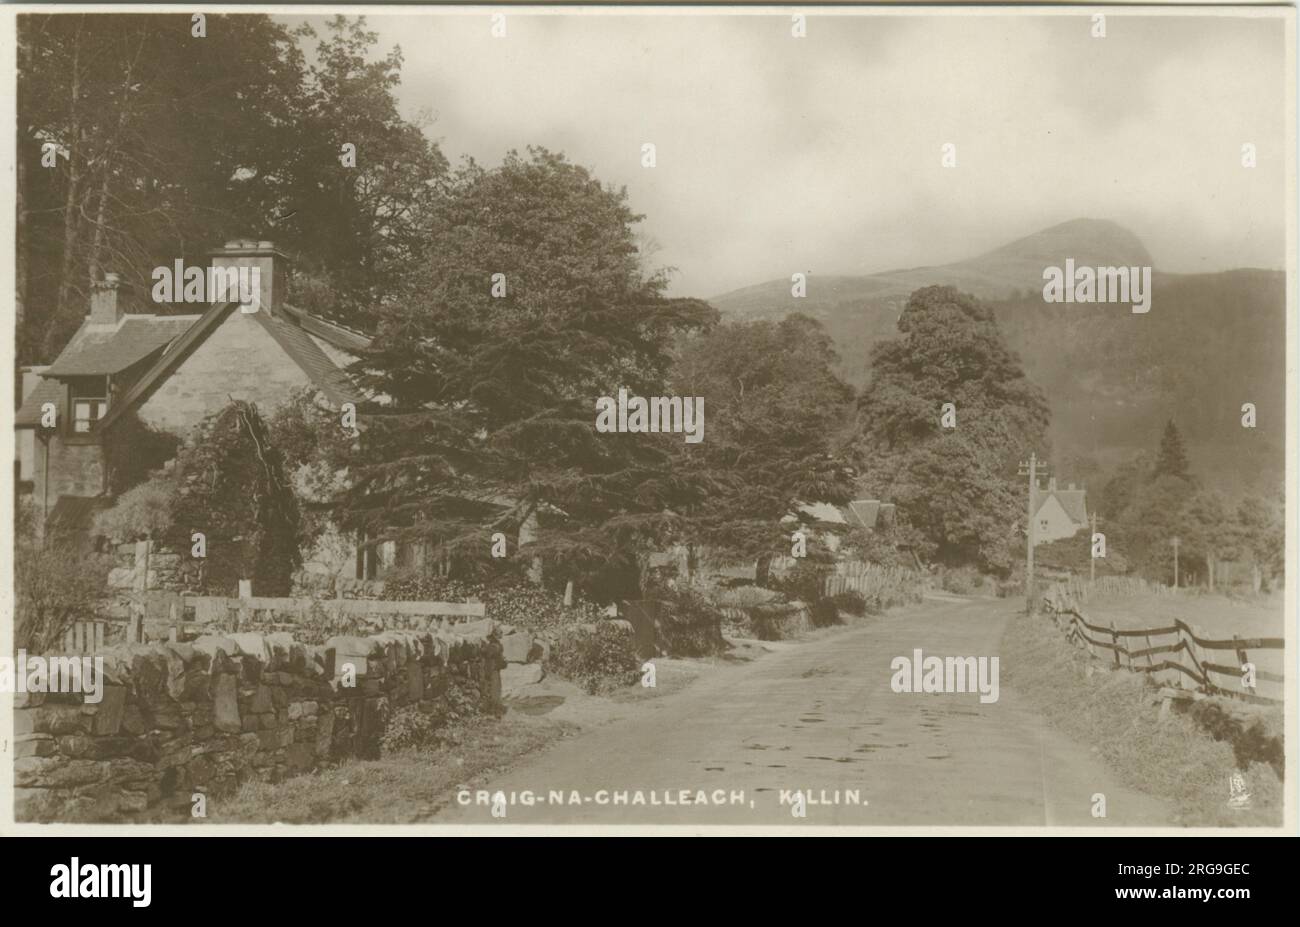 Craig-Na-Challeach, Killin, Stirling, Loch Tay, Stirlingshire, Scotland. Stock Photo